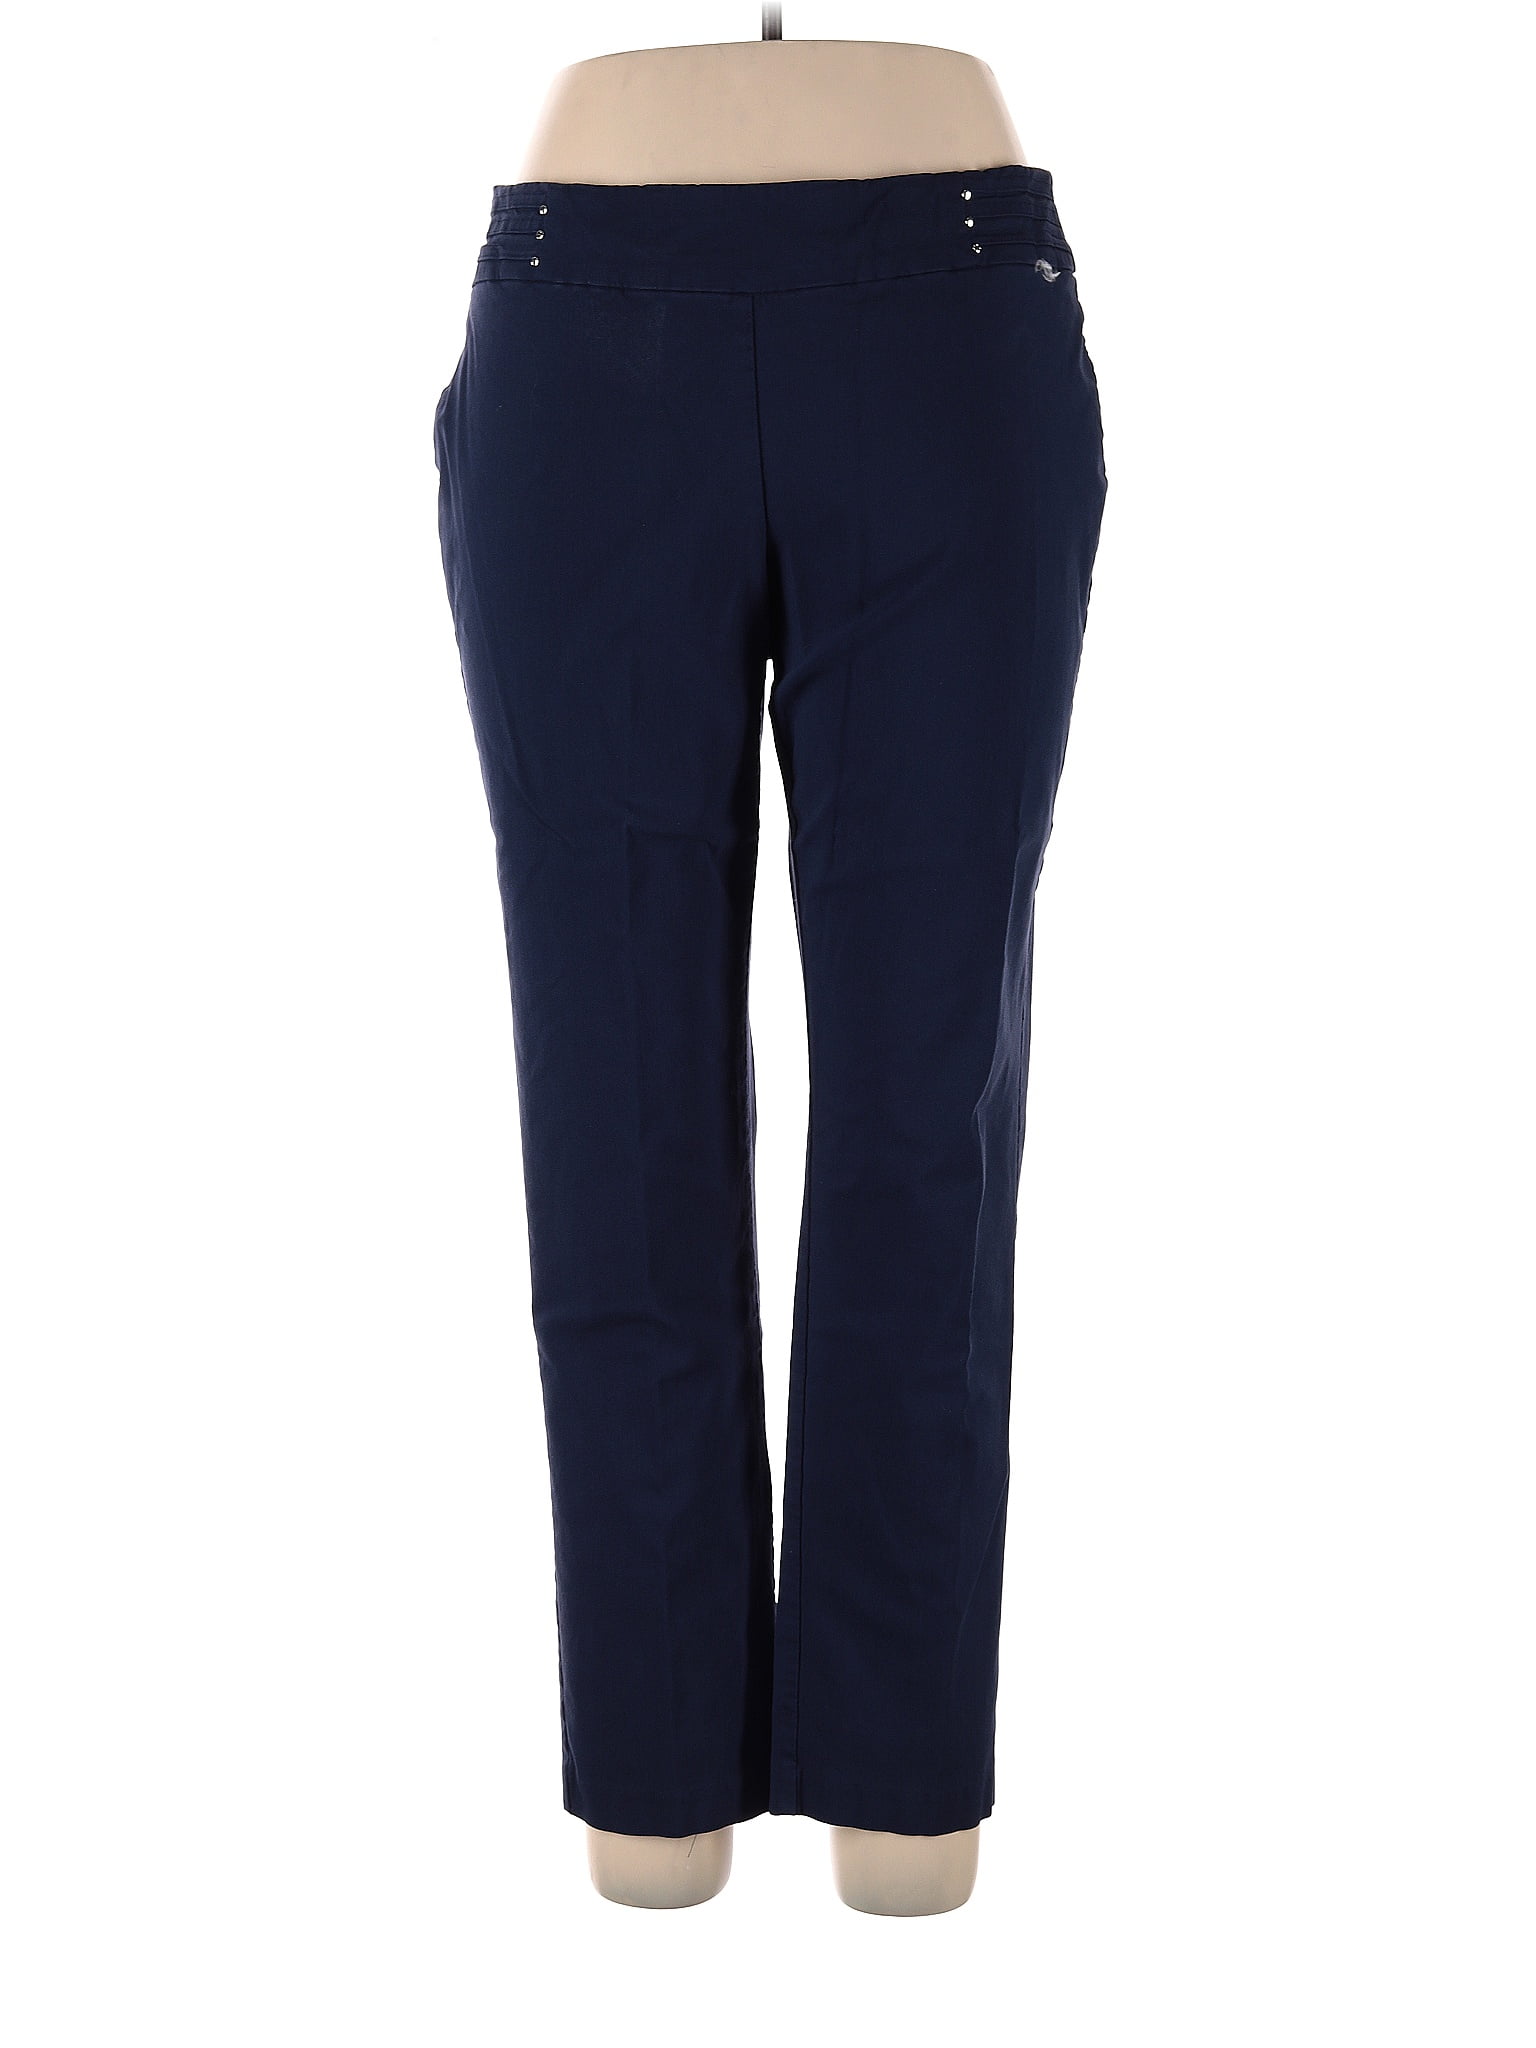 JM Collection Solid Navy Blue Dress Pants Size 16 - 54% off